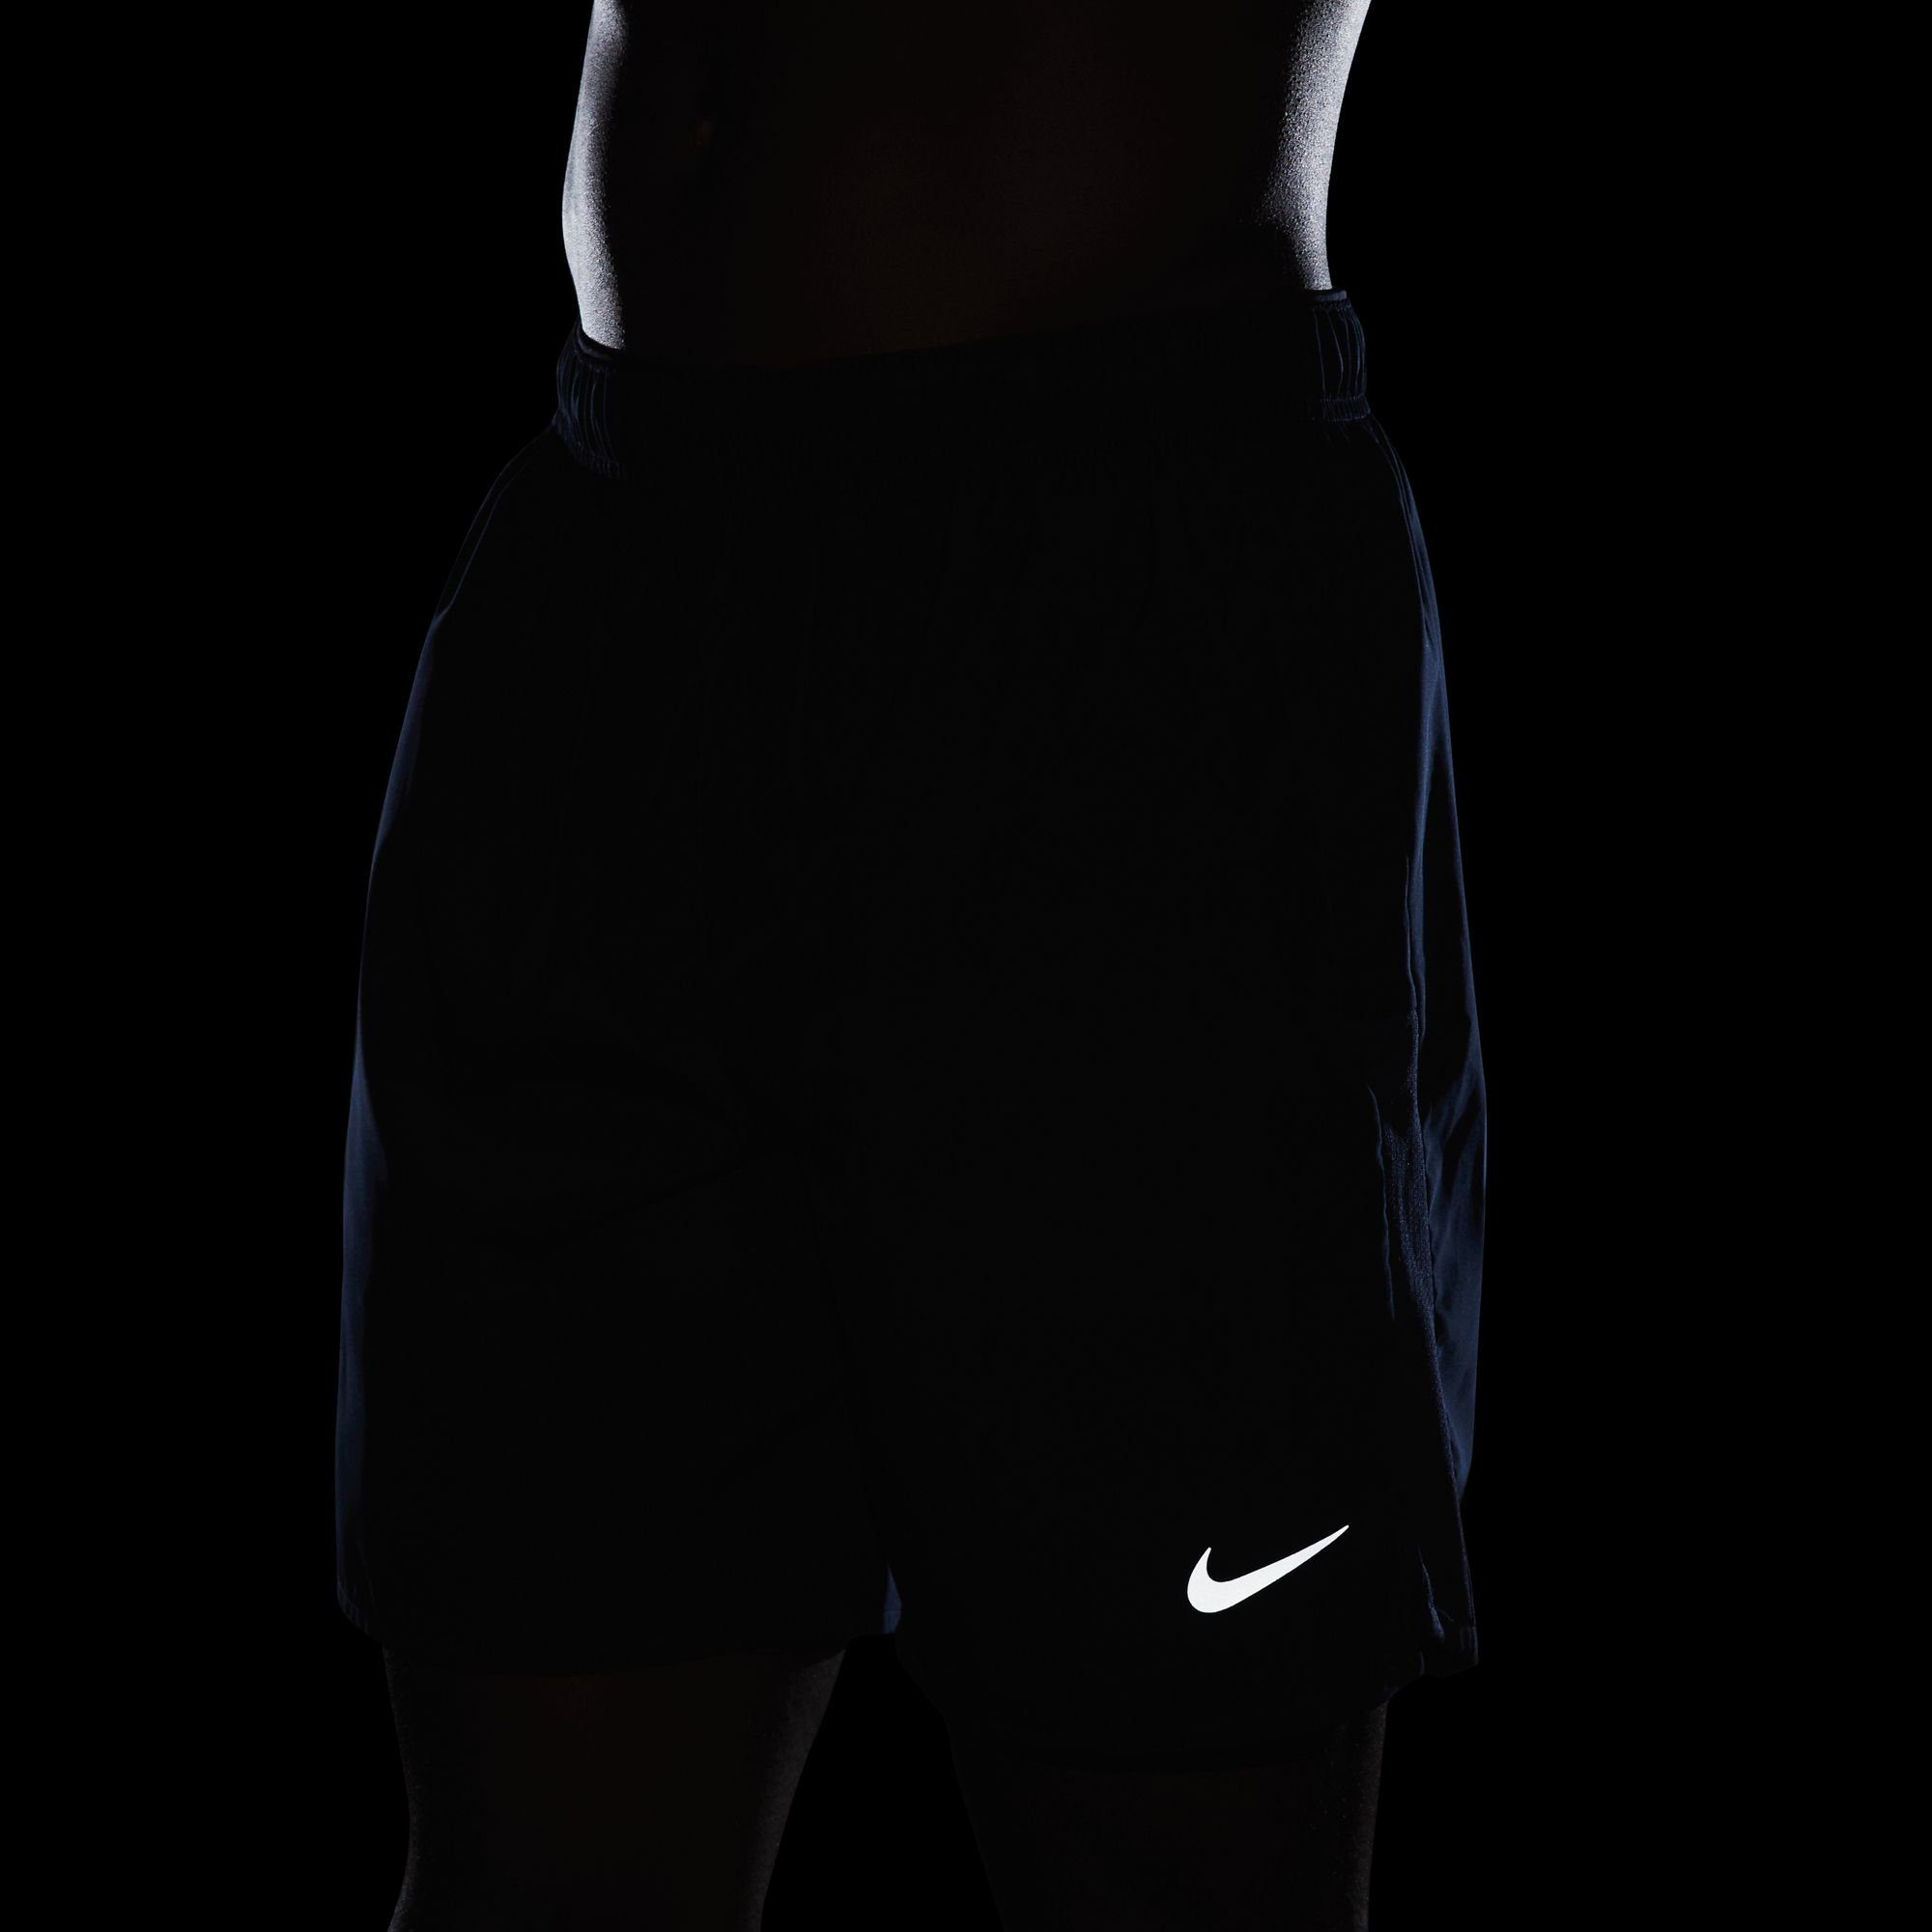 RUNNING UNLINED DRI-FIT Nike CHALLENGER SHORTS OBSIDIAN/OBSIDIAN/BLACK/REFLECTIVE Laufshorts SILV MEN'S